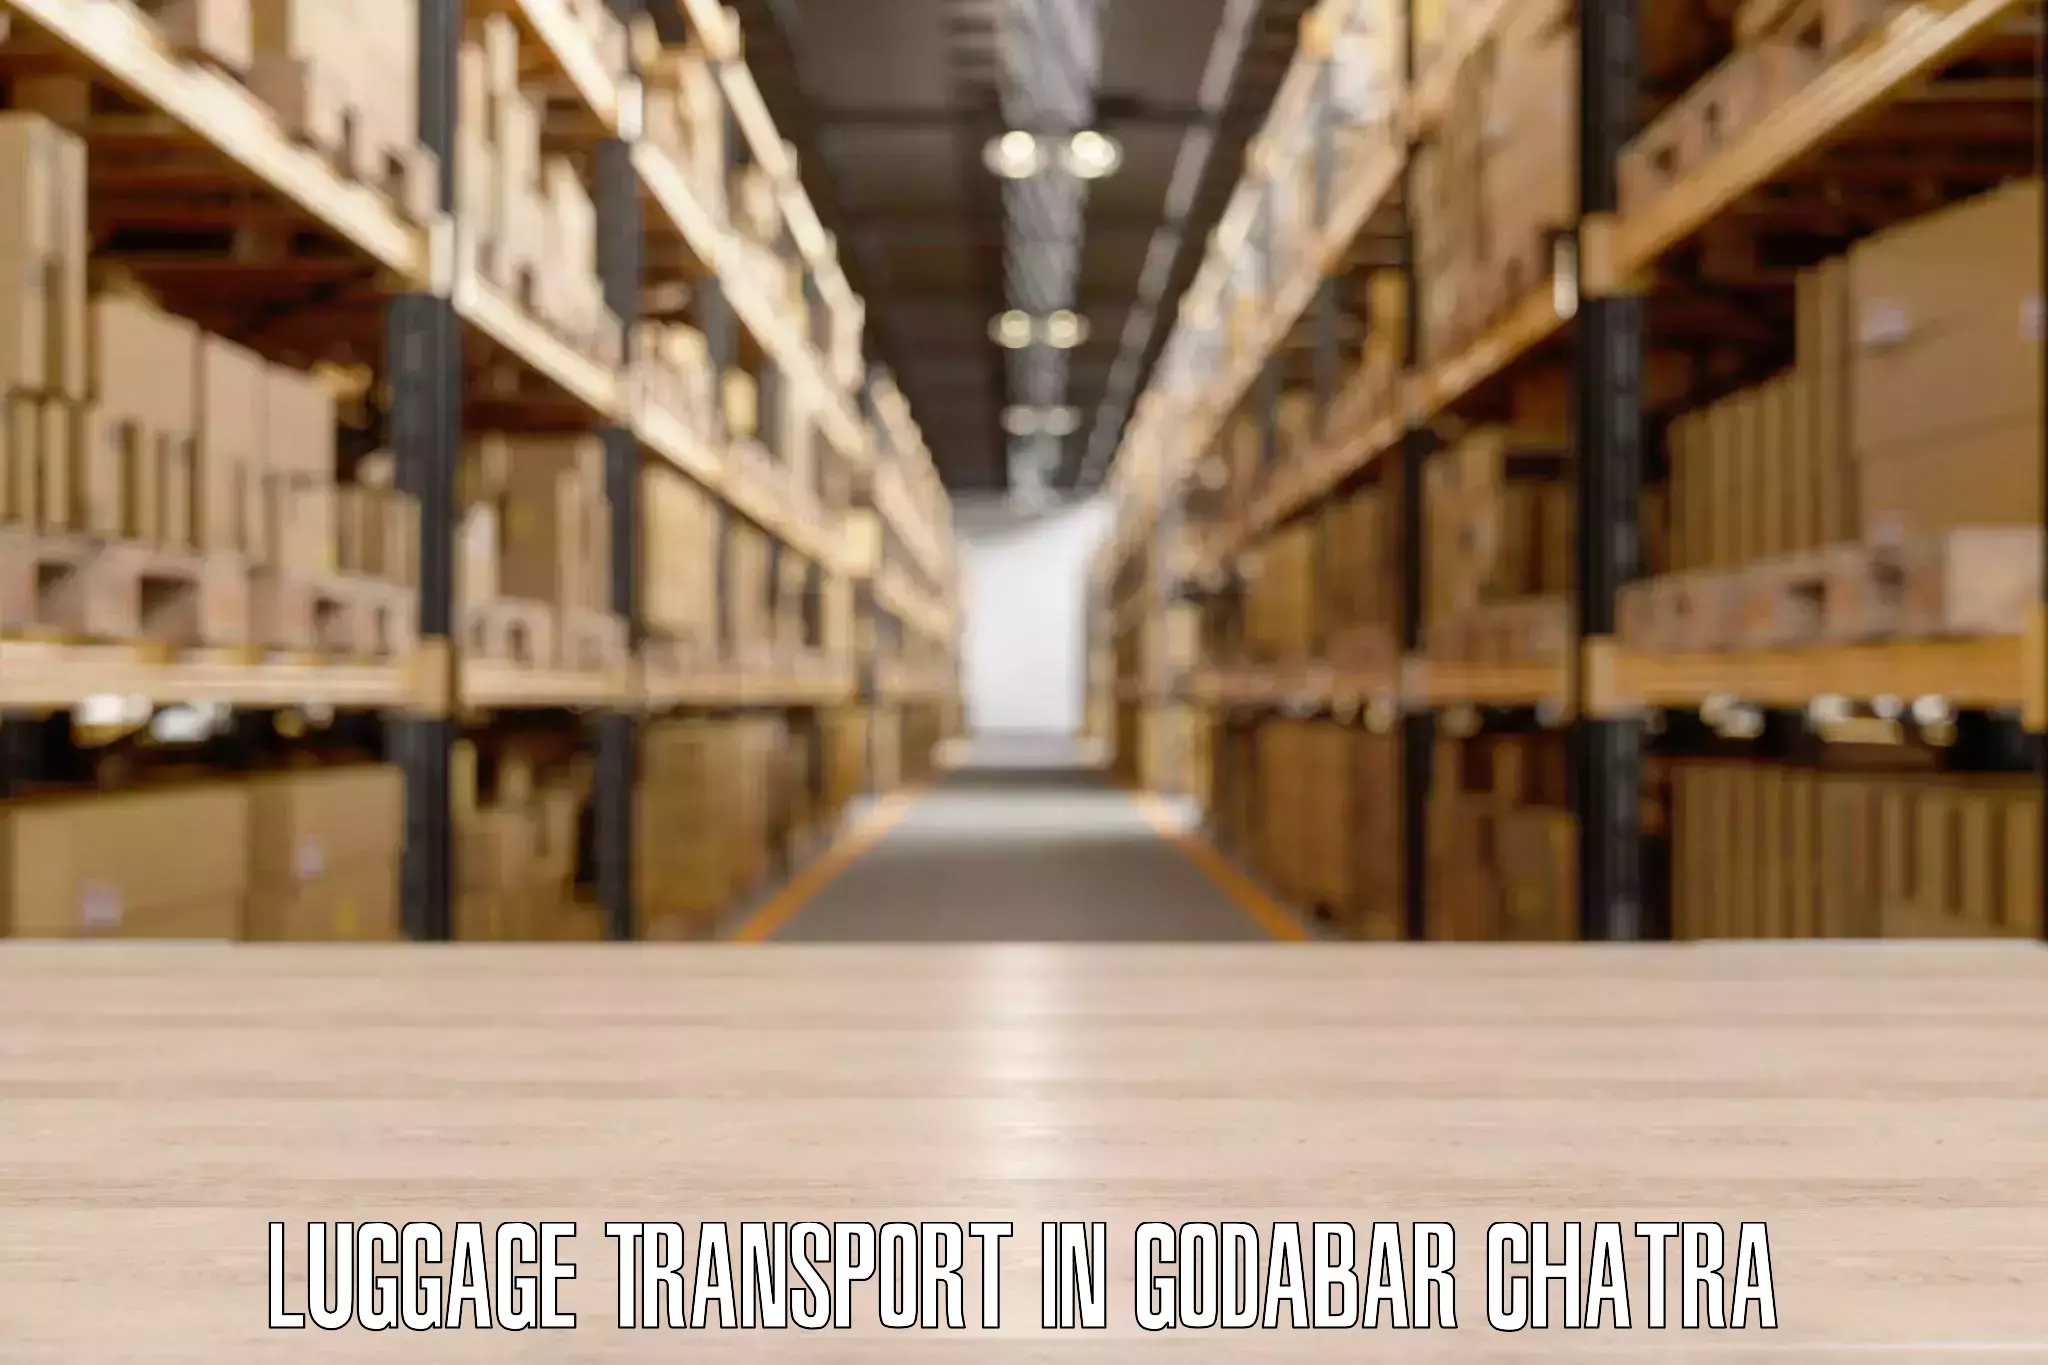 Luggage shipping options in Godabar Chatra